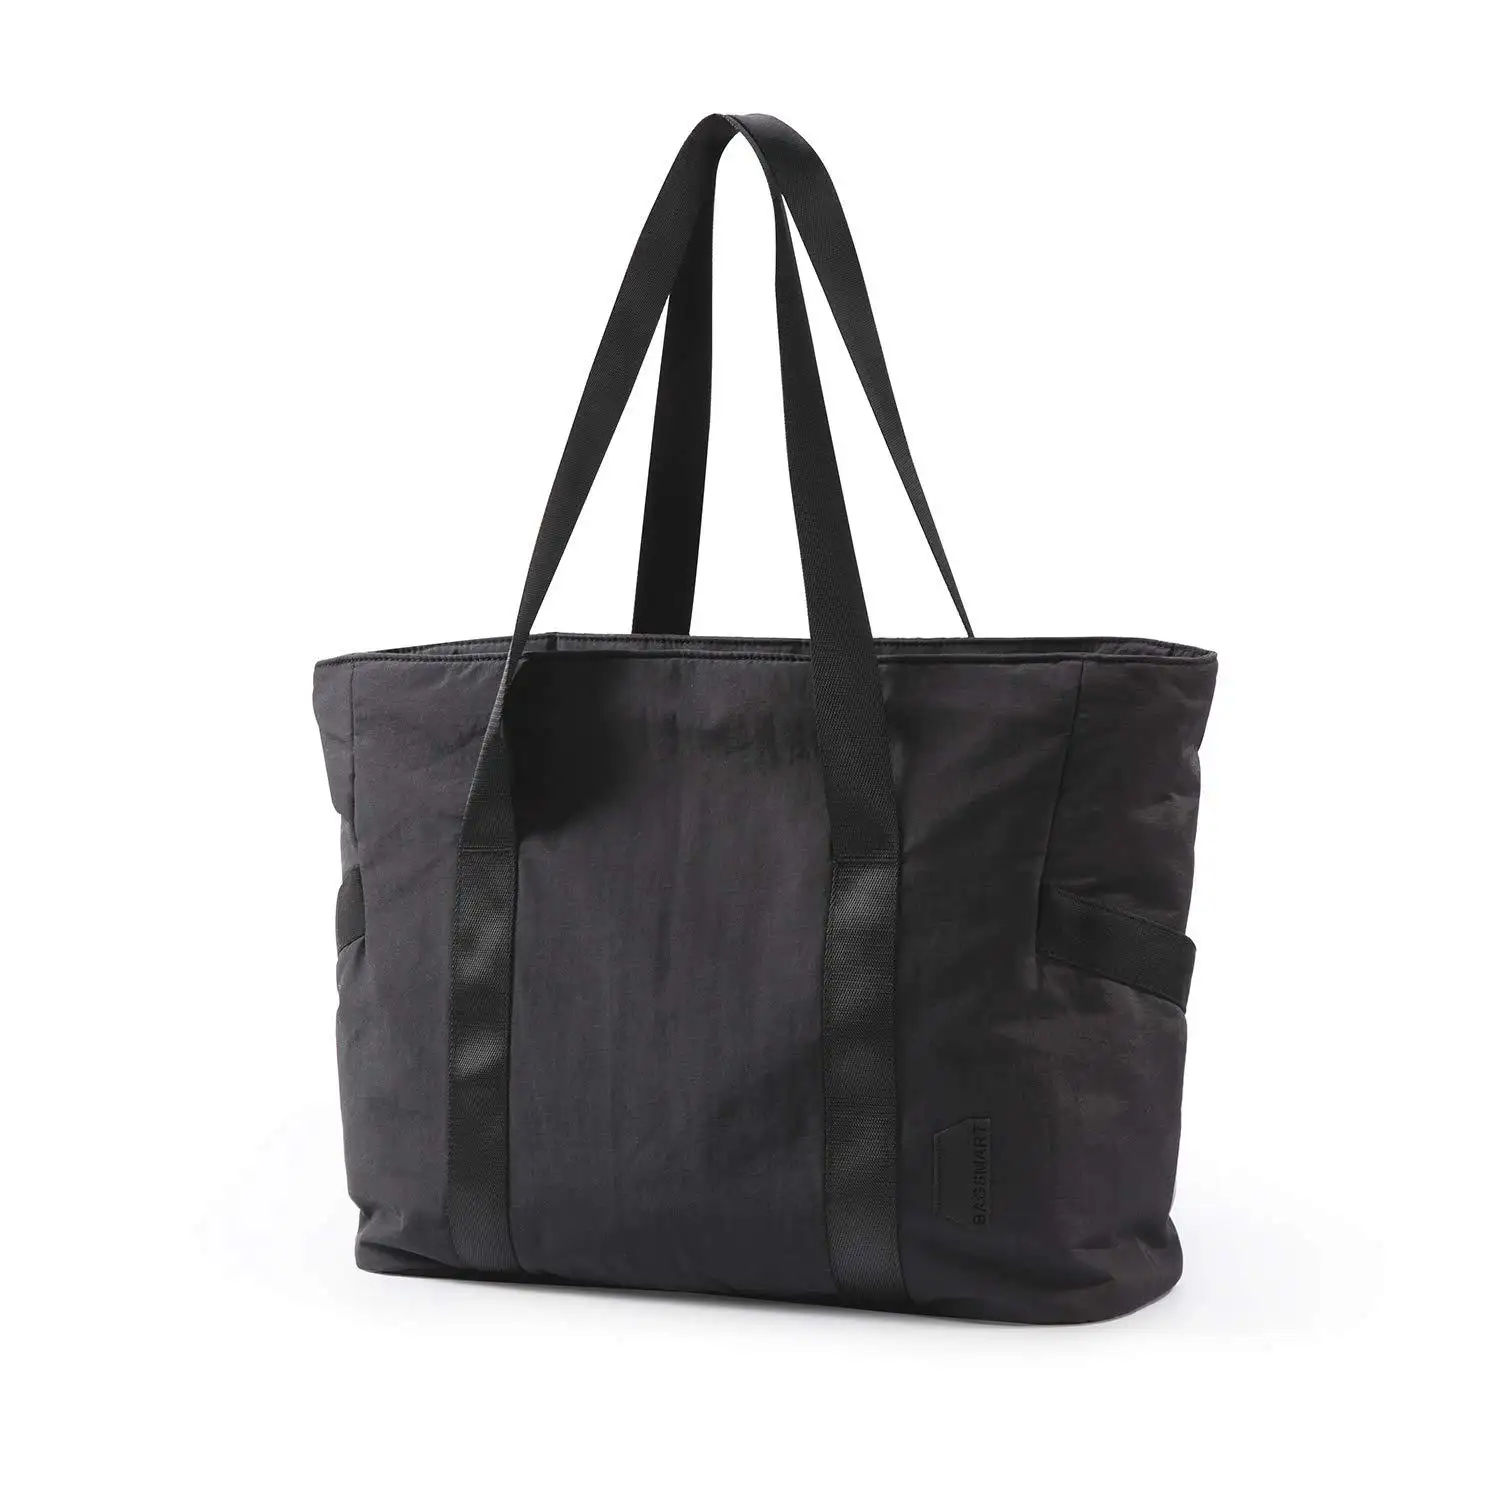 OEM ODM Waterproof High Quality Women Tote Bag Large Shoulder Bag Top Handle Handbag